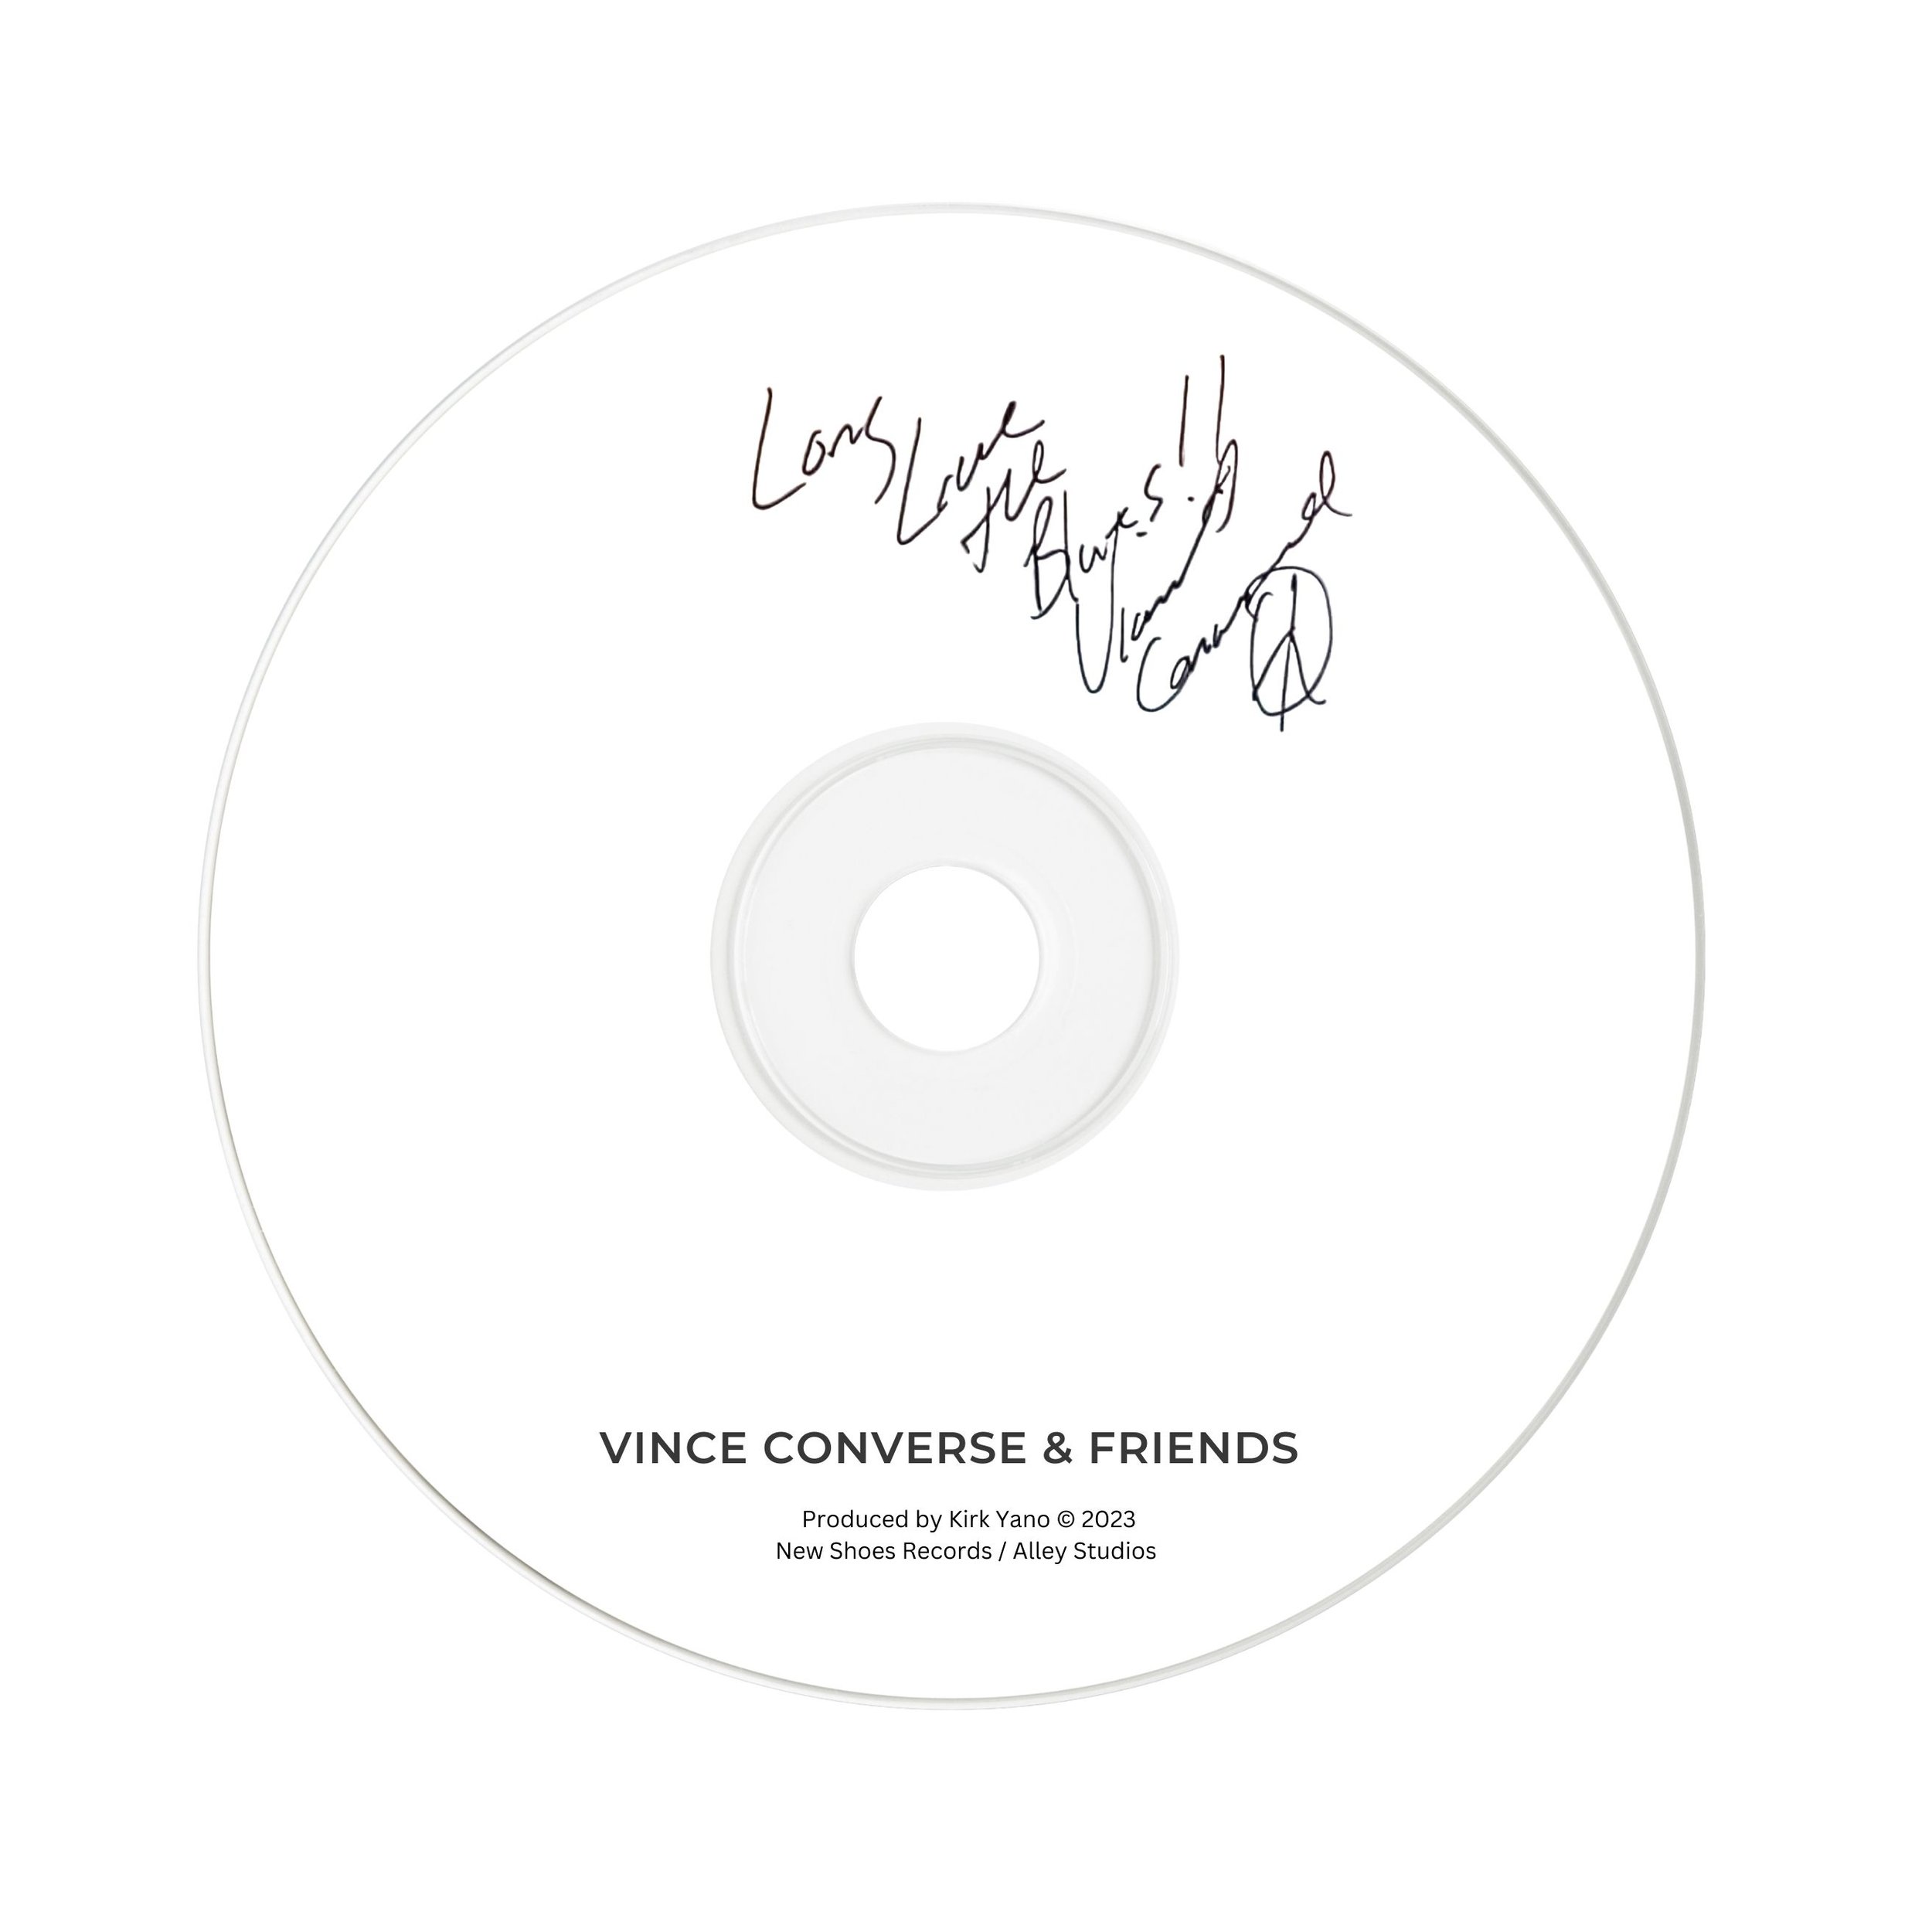 CD Cover - Vince Converse & Friends.jpg